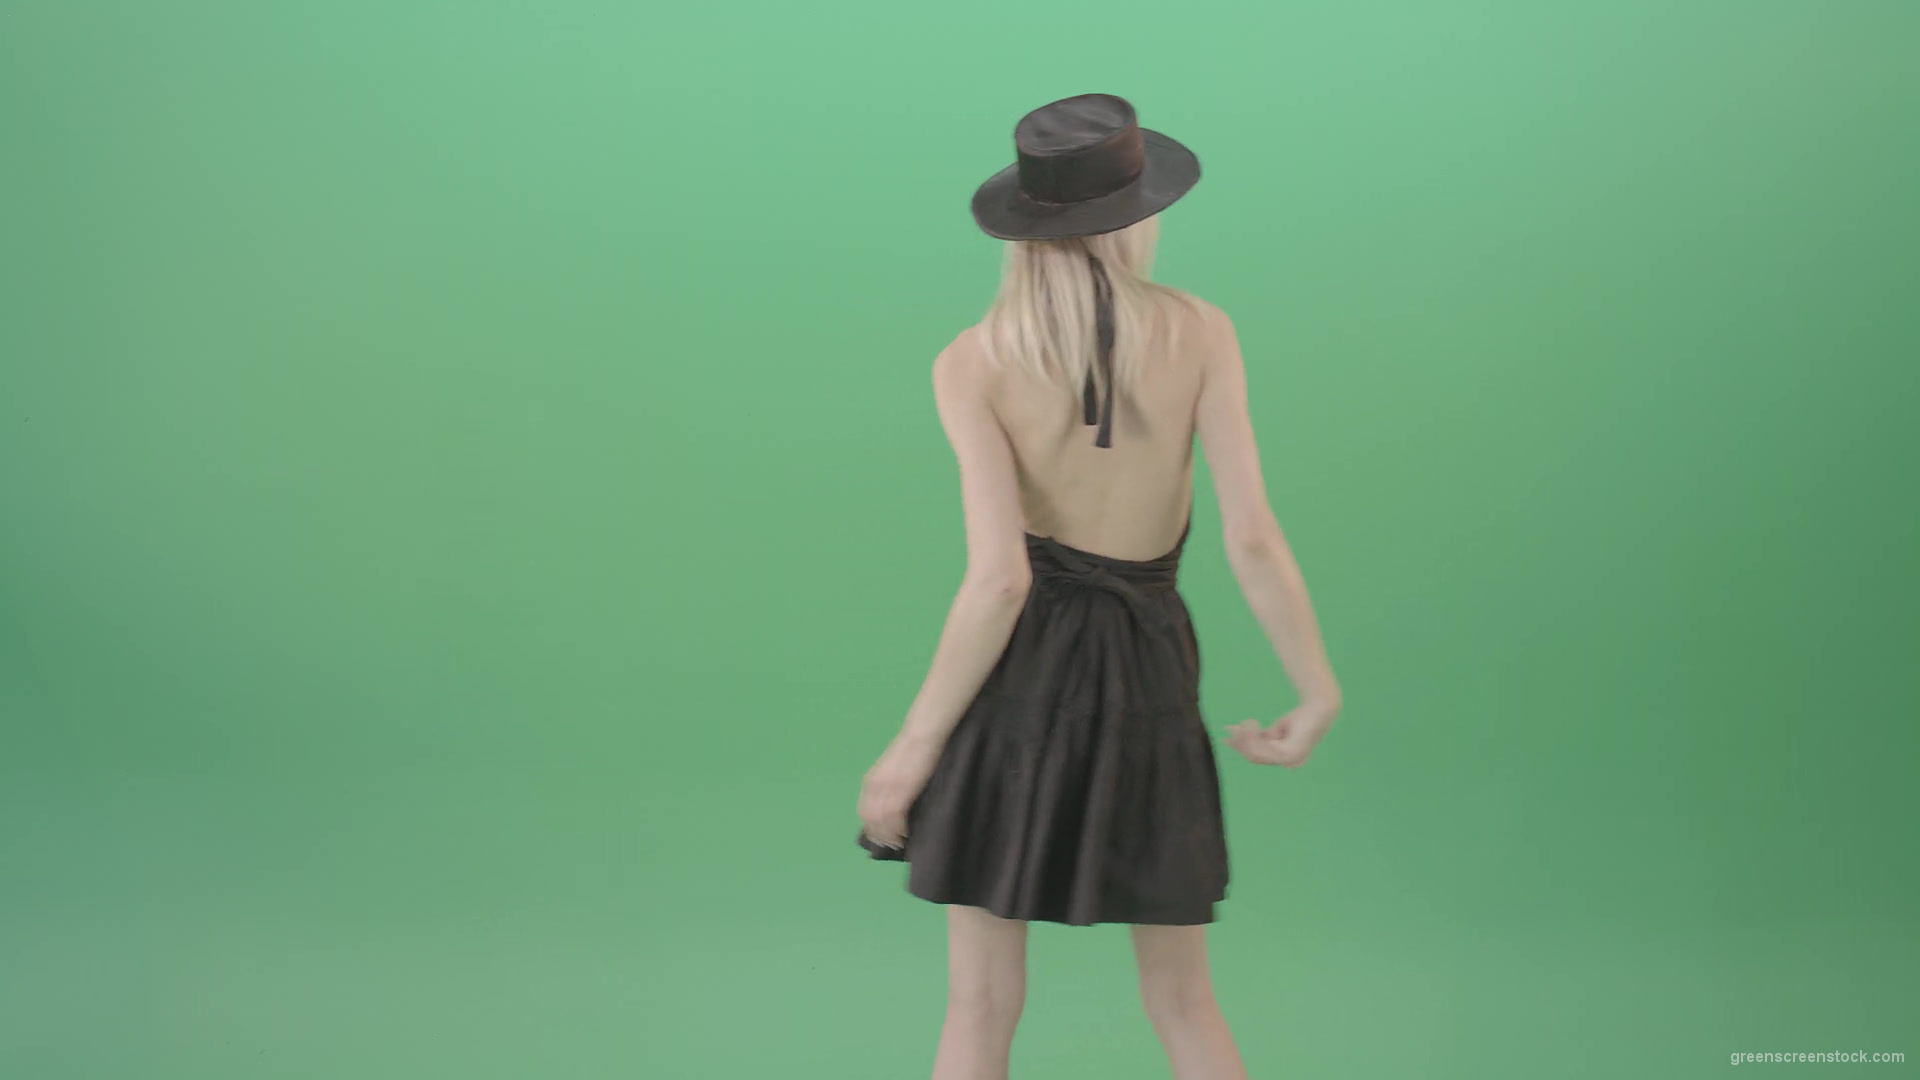 Blonde-girl-in-black-hat-with-open-back-posing-in-dark-dress-over-green-screen-4K-Video-Footage-1920_007 Green Screen Stock